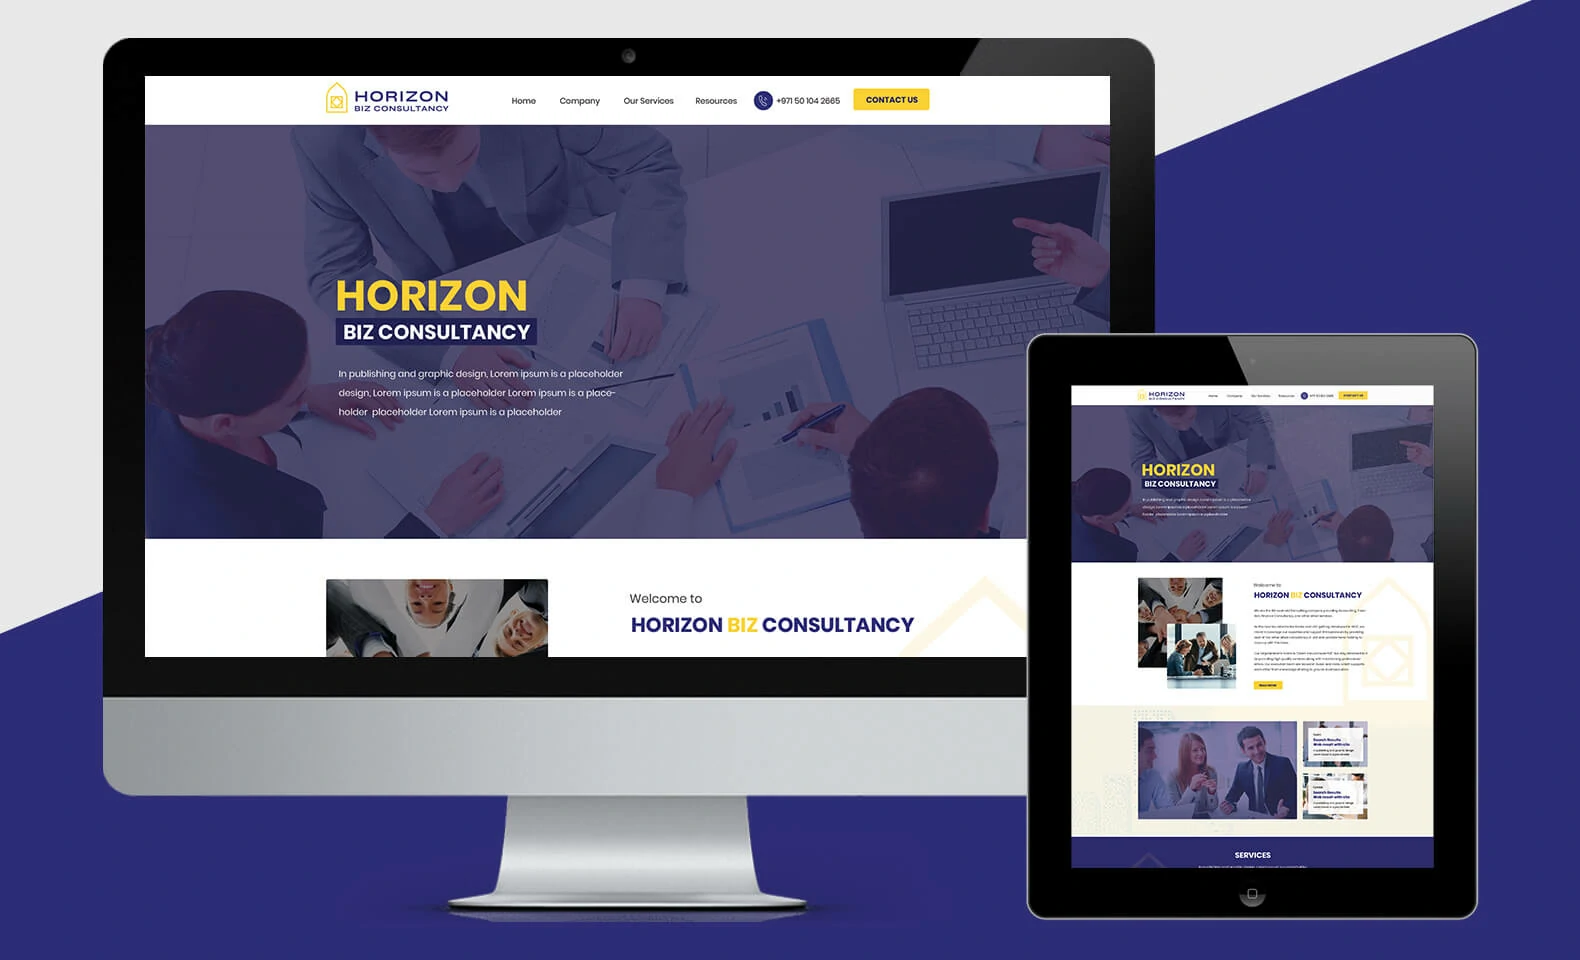 Horizon Dubai Web design and Development Work Image 1